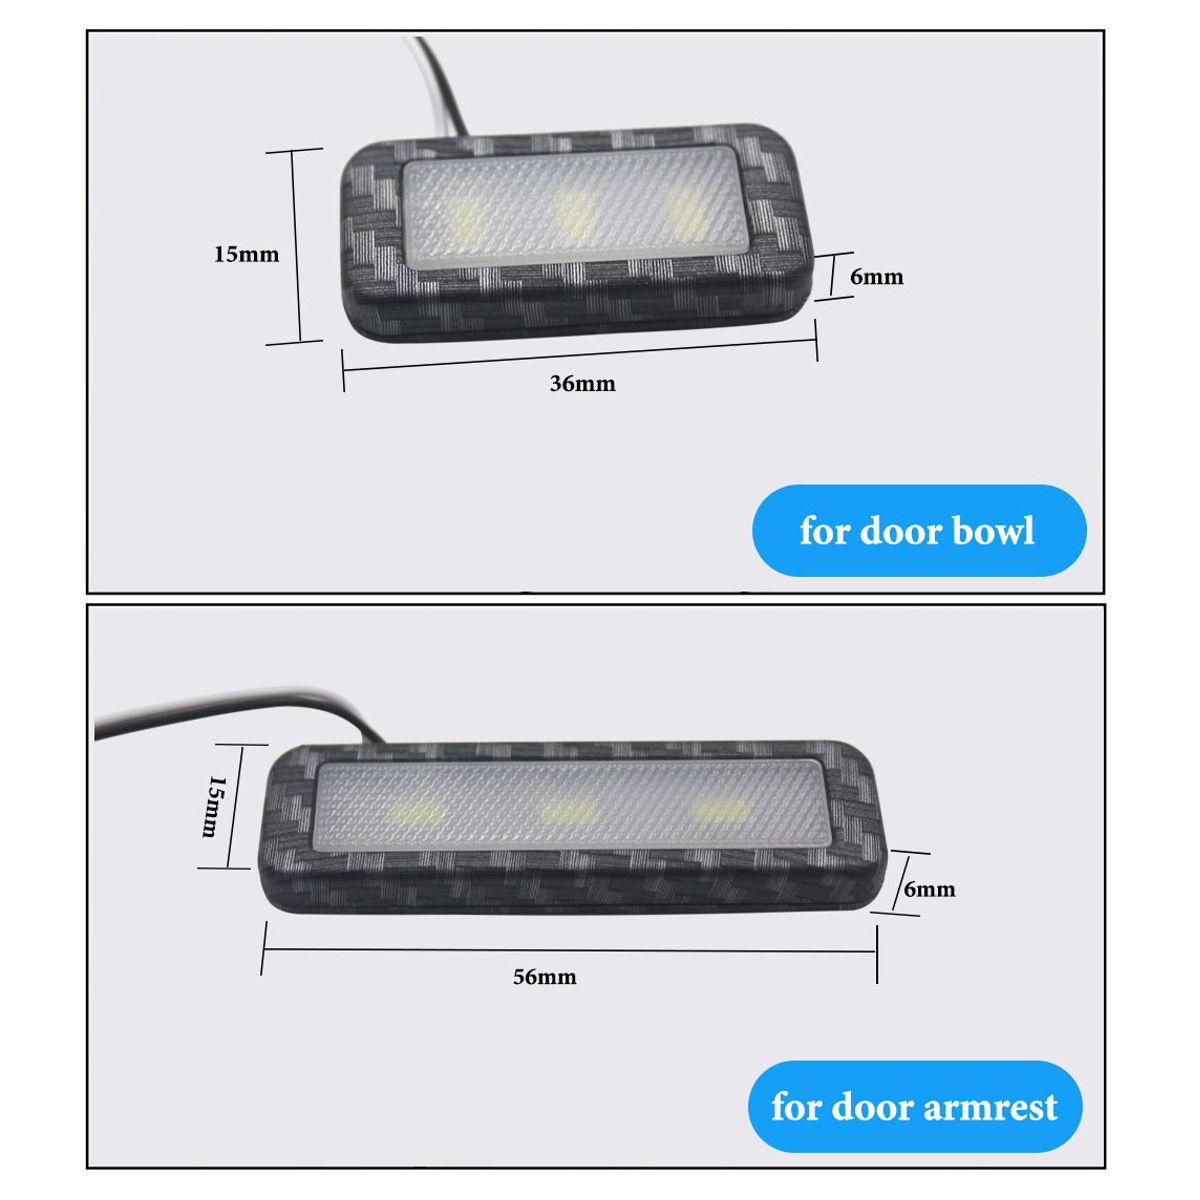 LED-Car-Atmosphere-Lamp-Kit-Sound-Control-Interior-Ambient-Light-Decoration-1766655